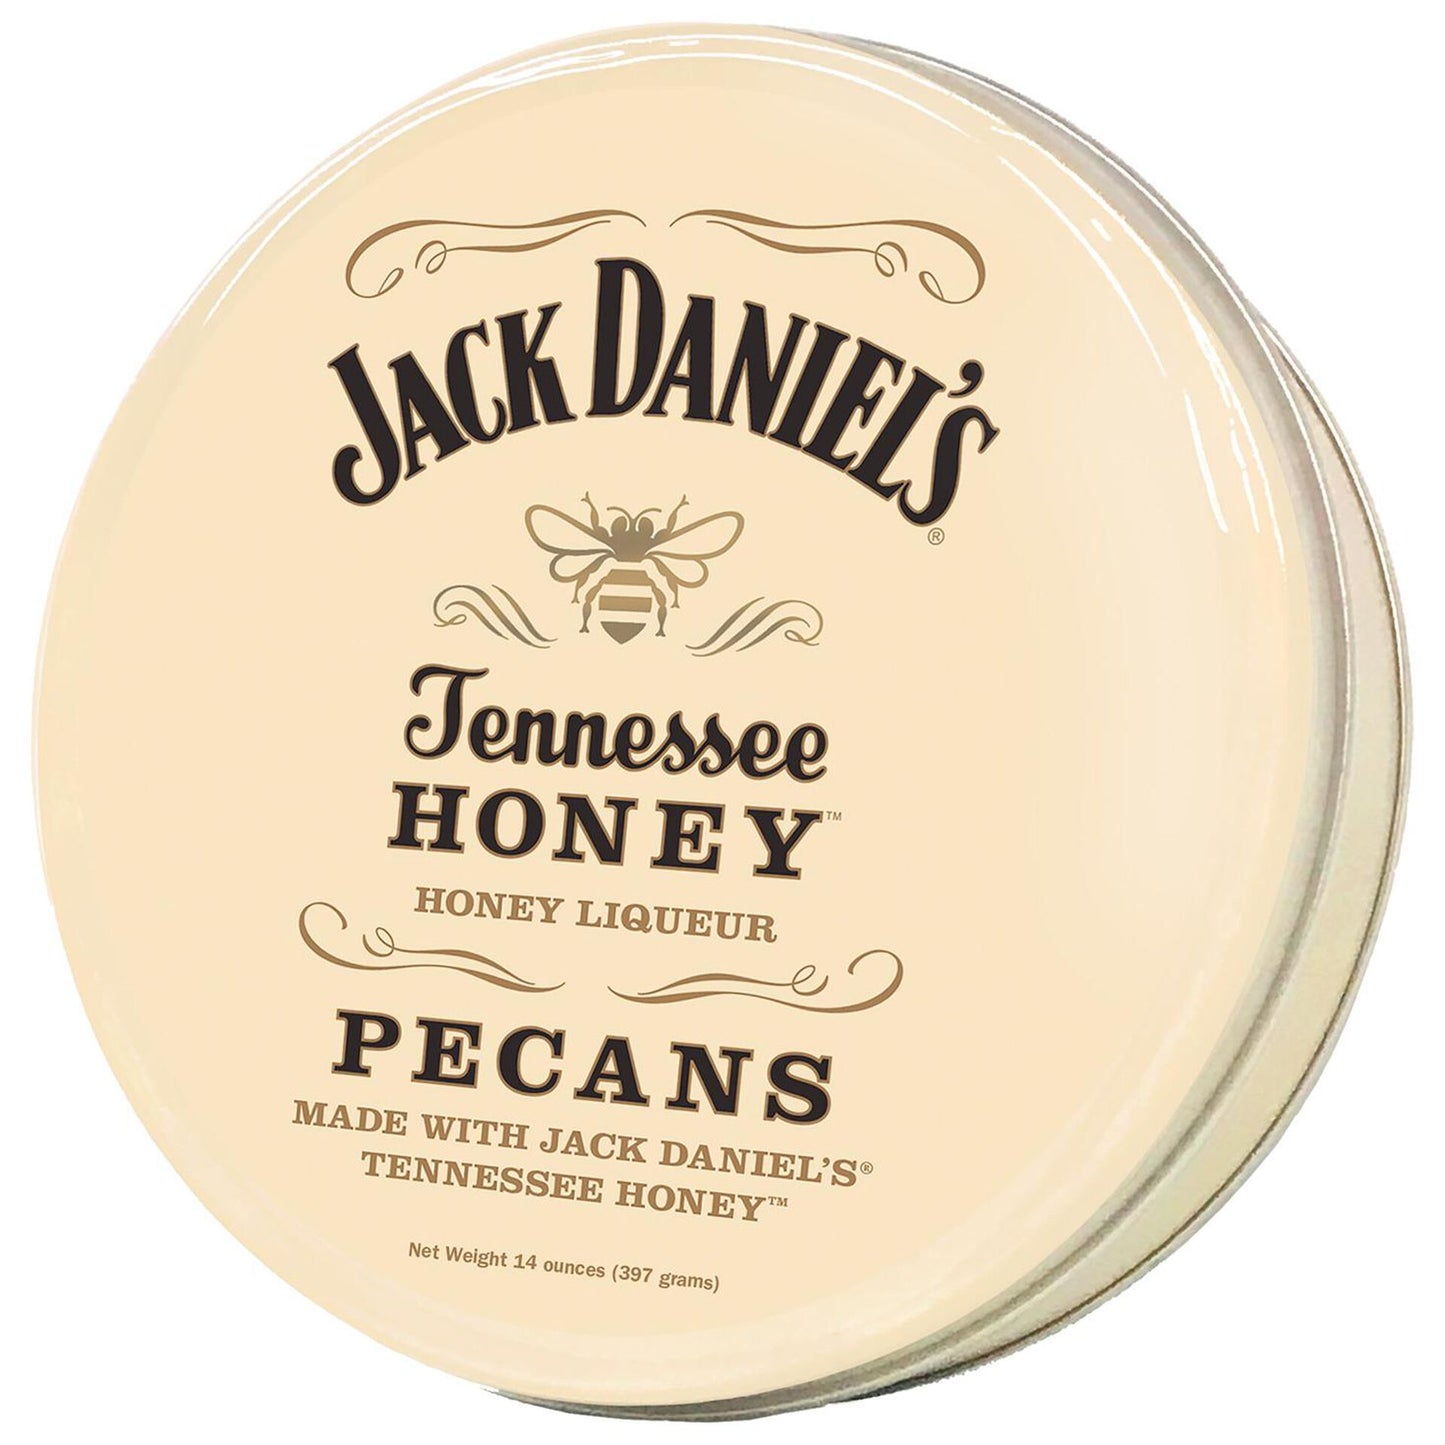 Jack Daniel's Tennessee Honey Pecans - 14oz (397g)